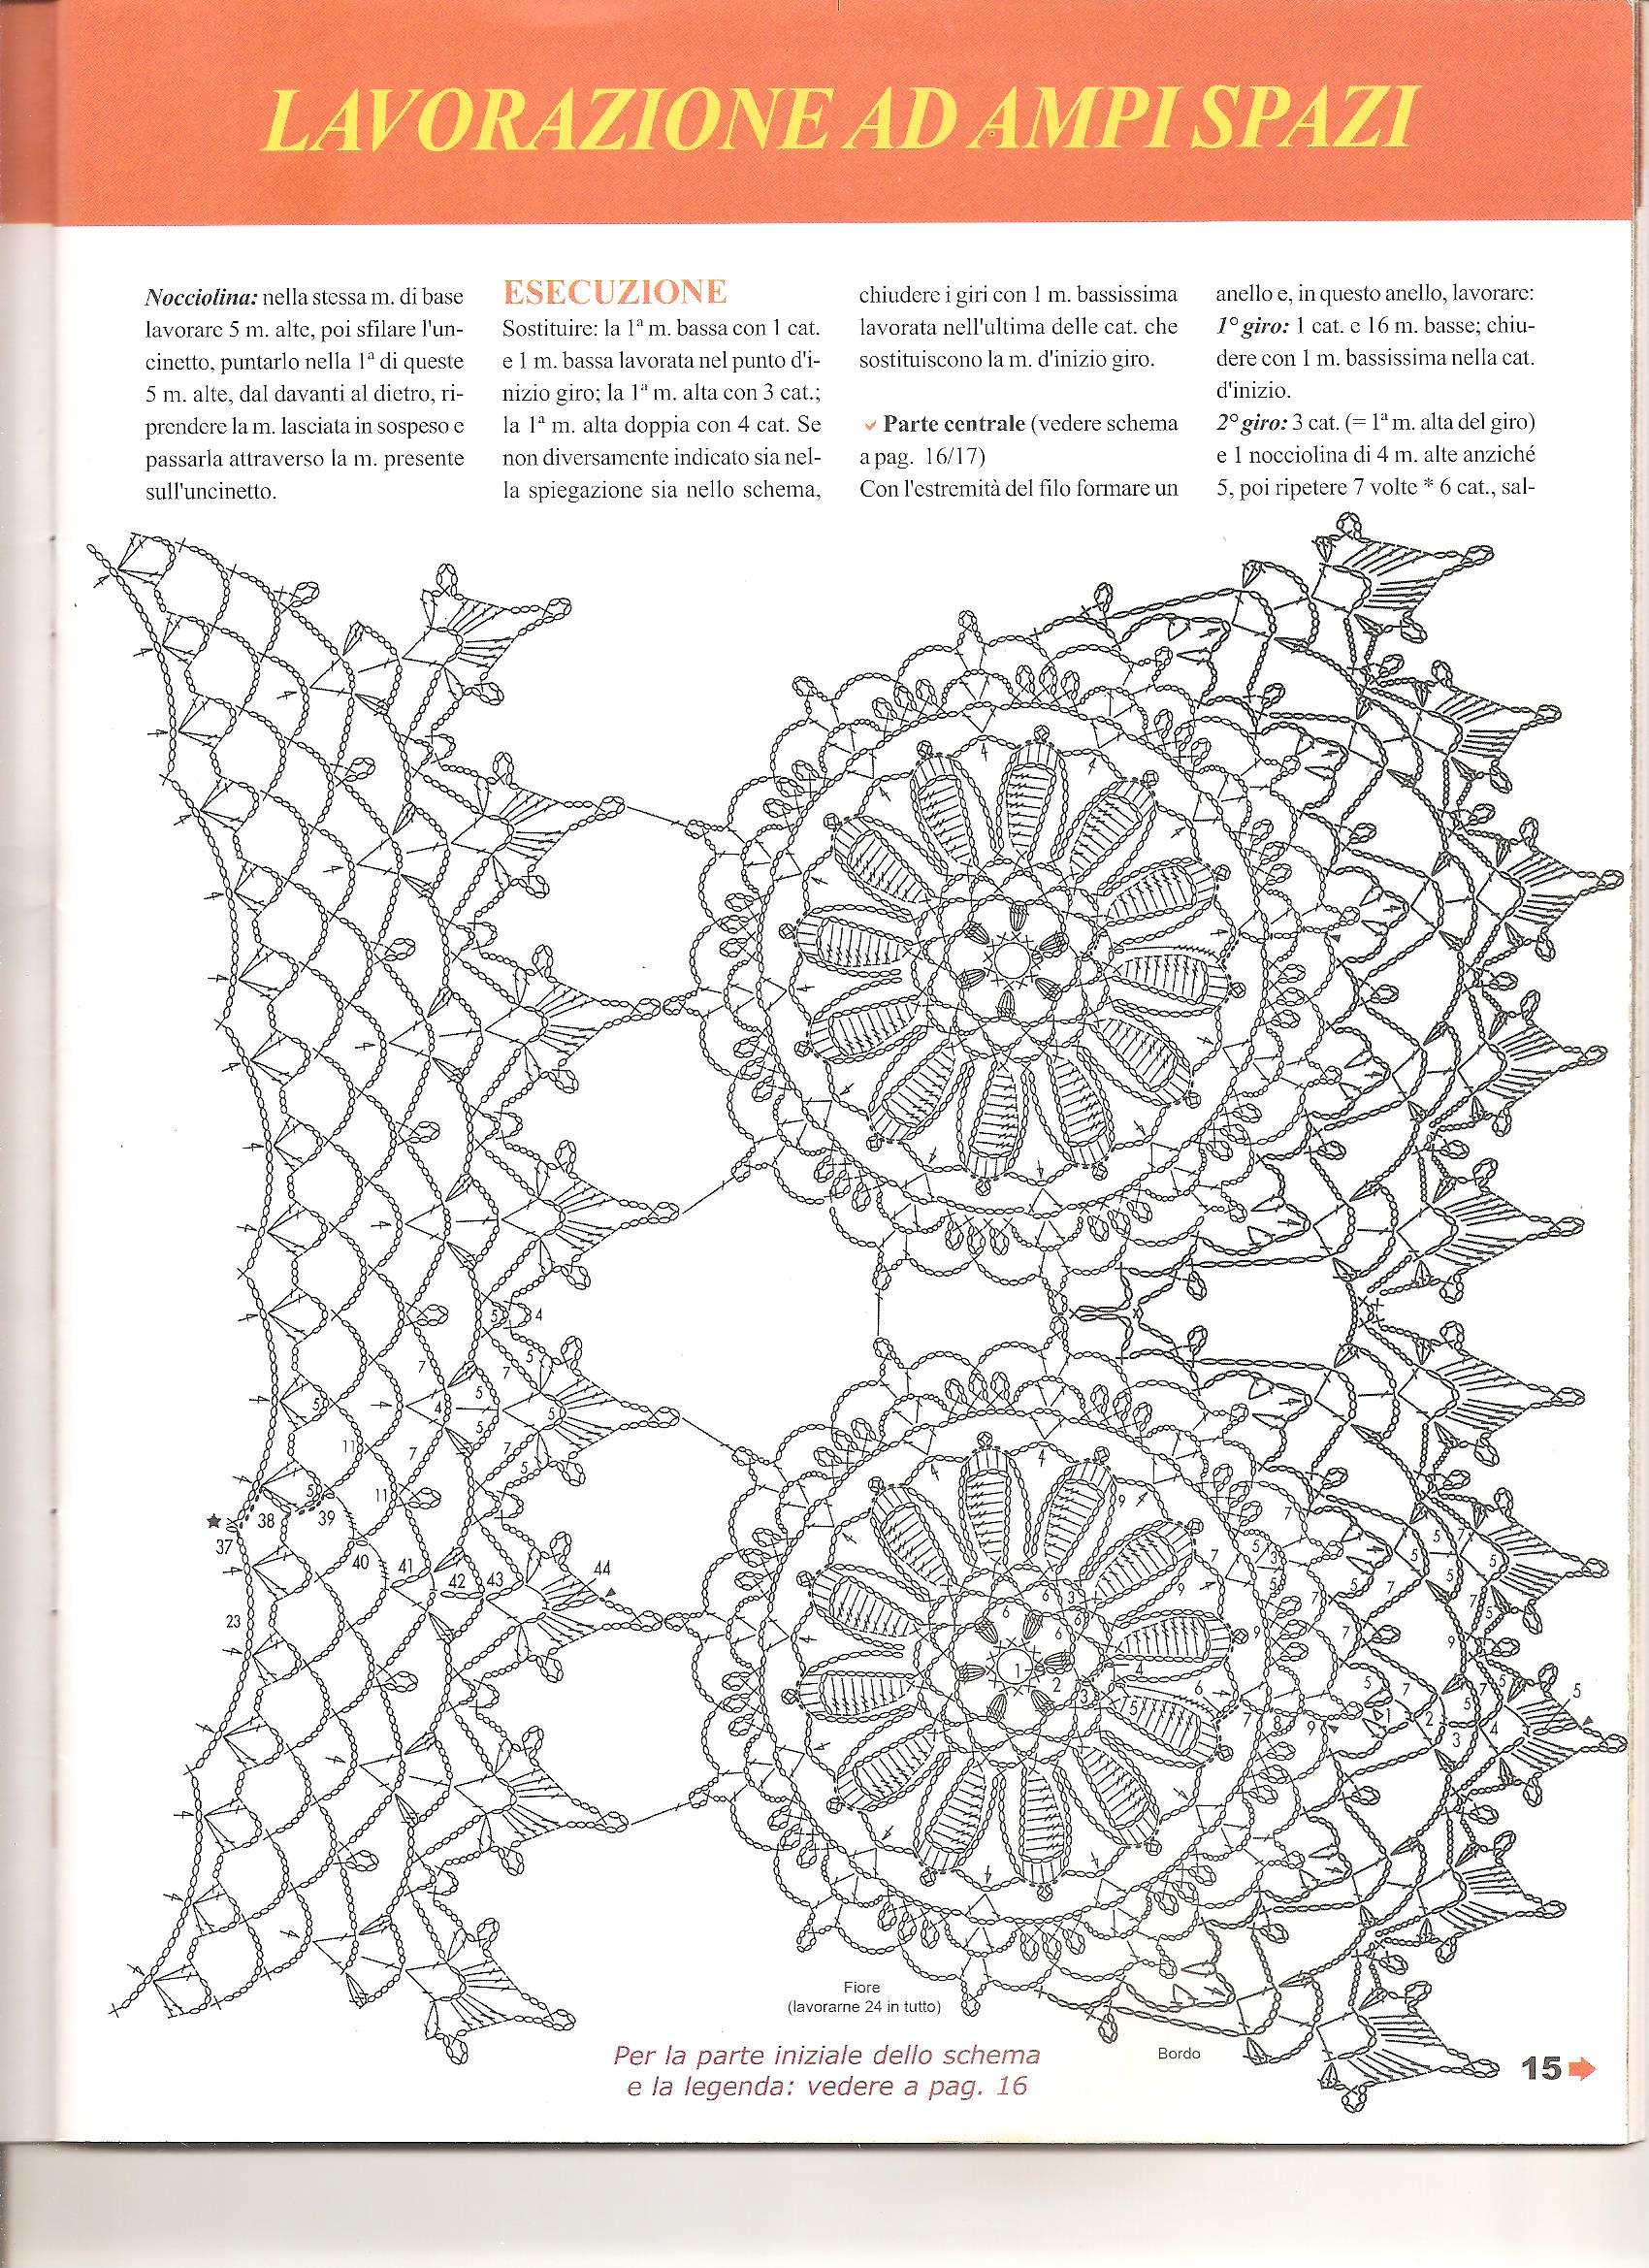 Crochet round tablecloth spacious (2)